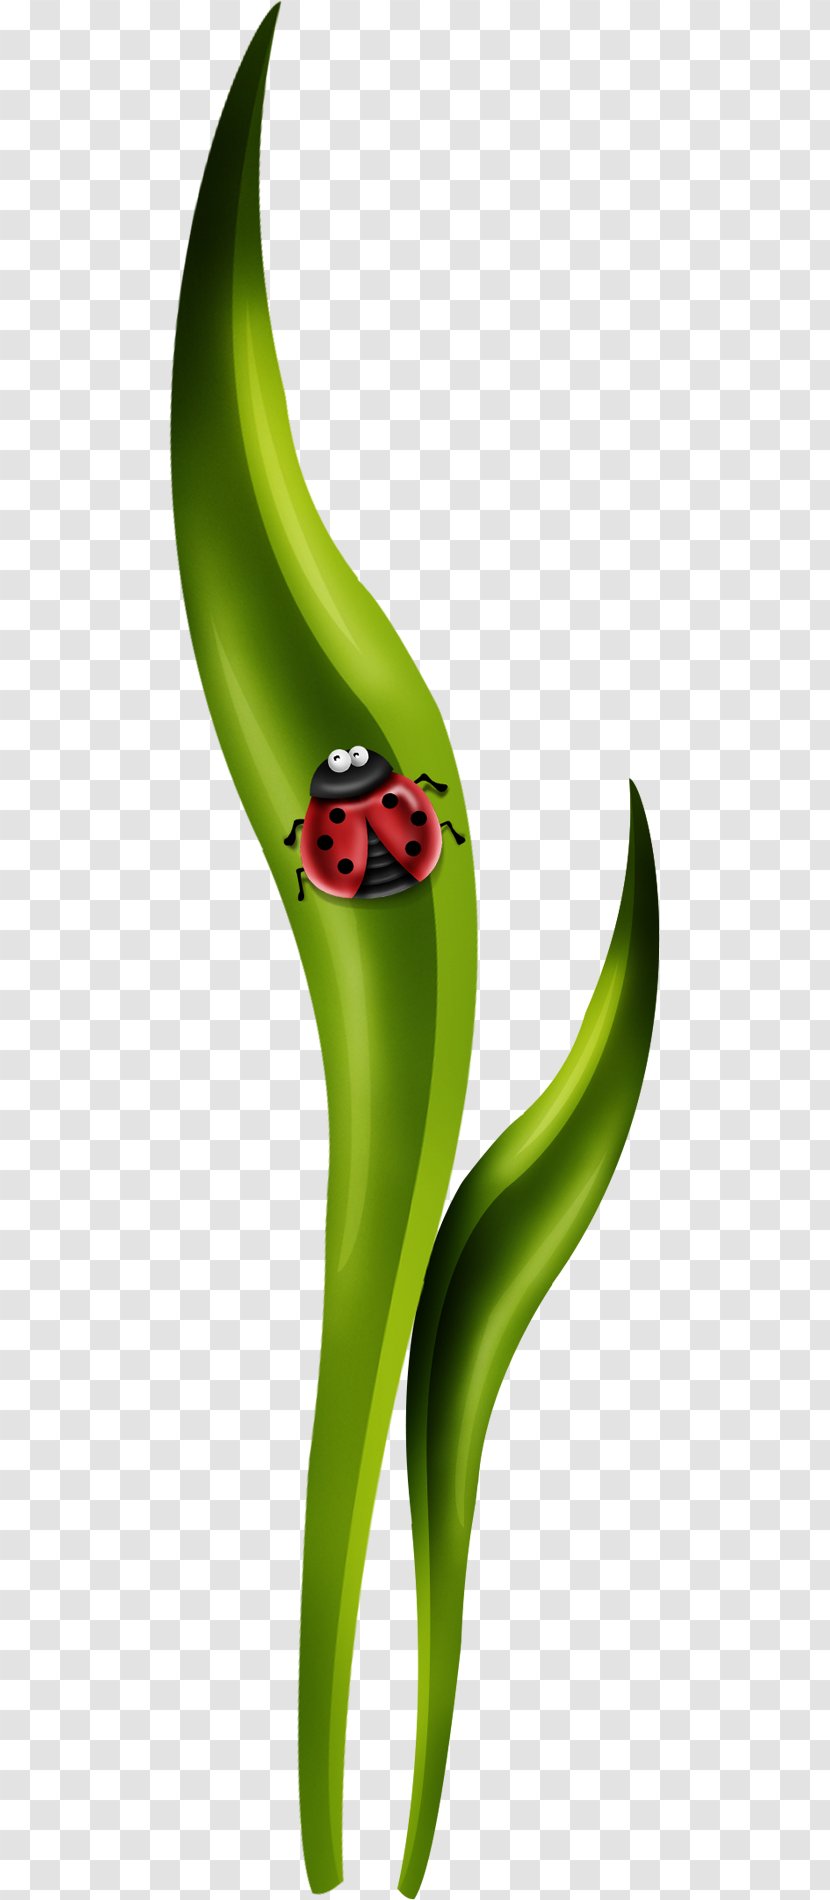 Cartoon Green - Dessin Animxe9 - Creative Leaves Ladybug Transparent PNG